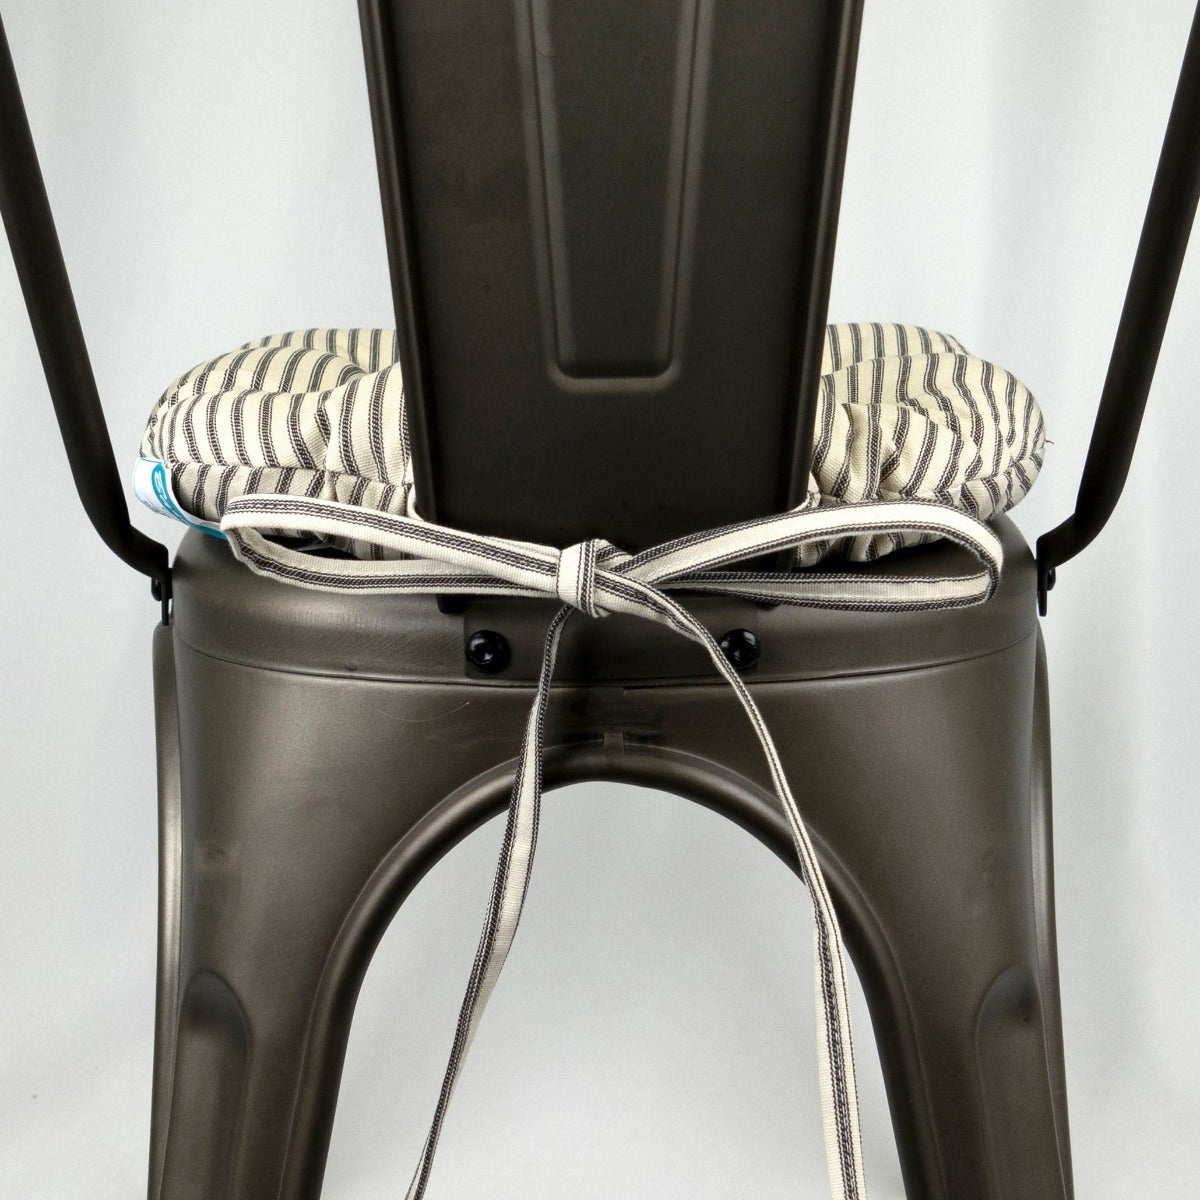 Ticking Stripe Black Industrial Chair Cushion - Reversible, Latex Foam Fill